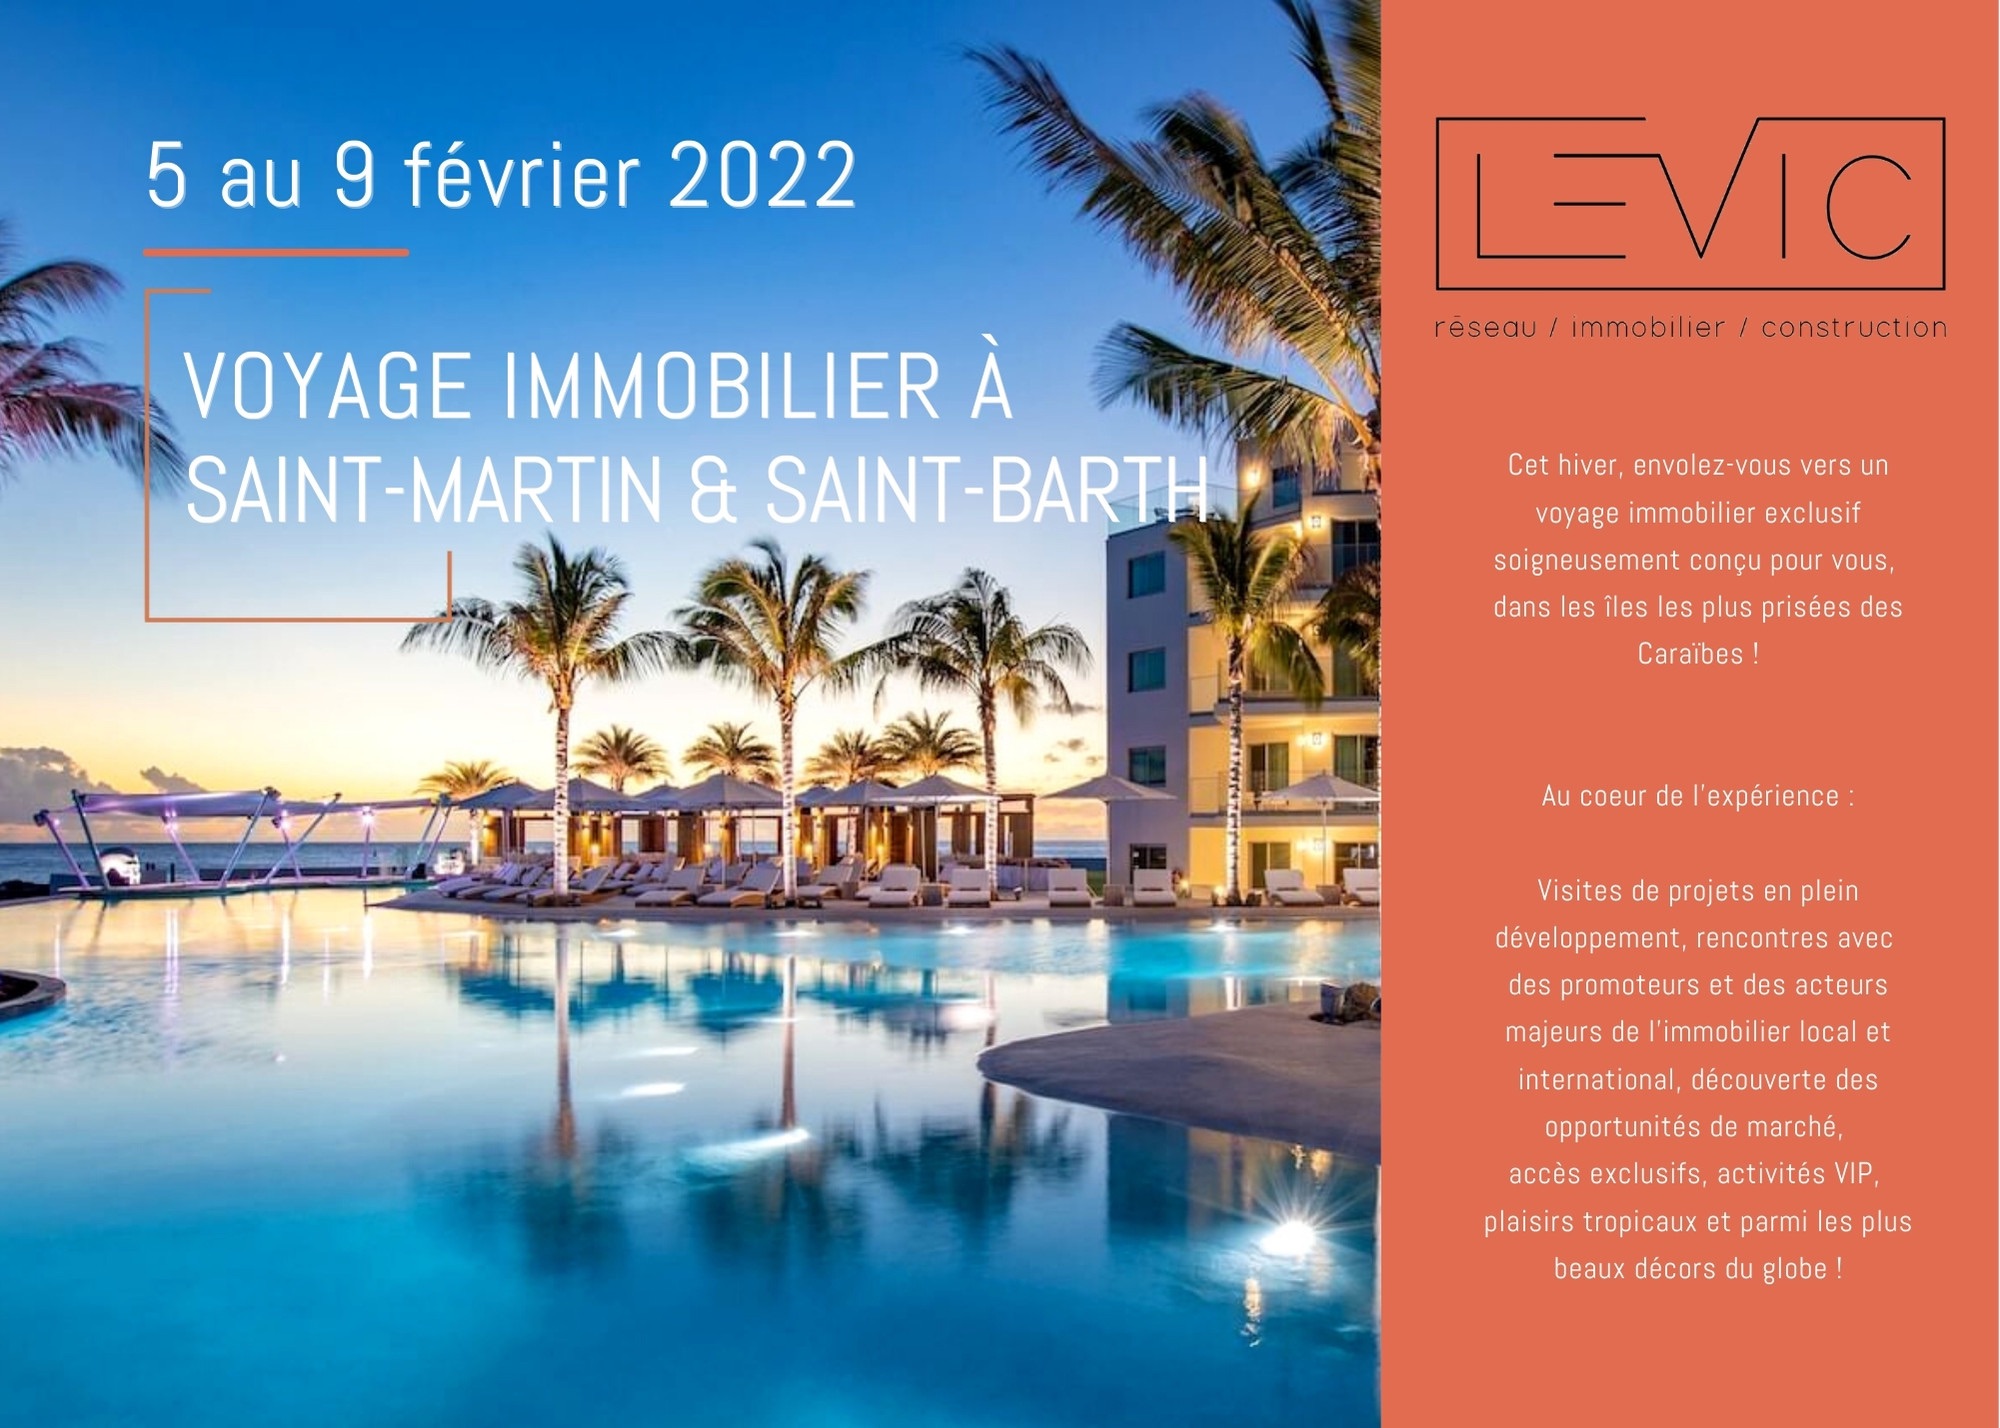 Voyage immobilier exclusif Saint-Martin & Saint-Barth